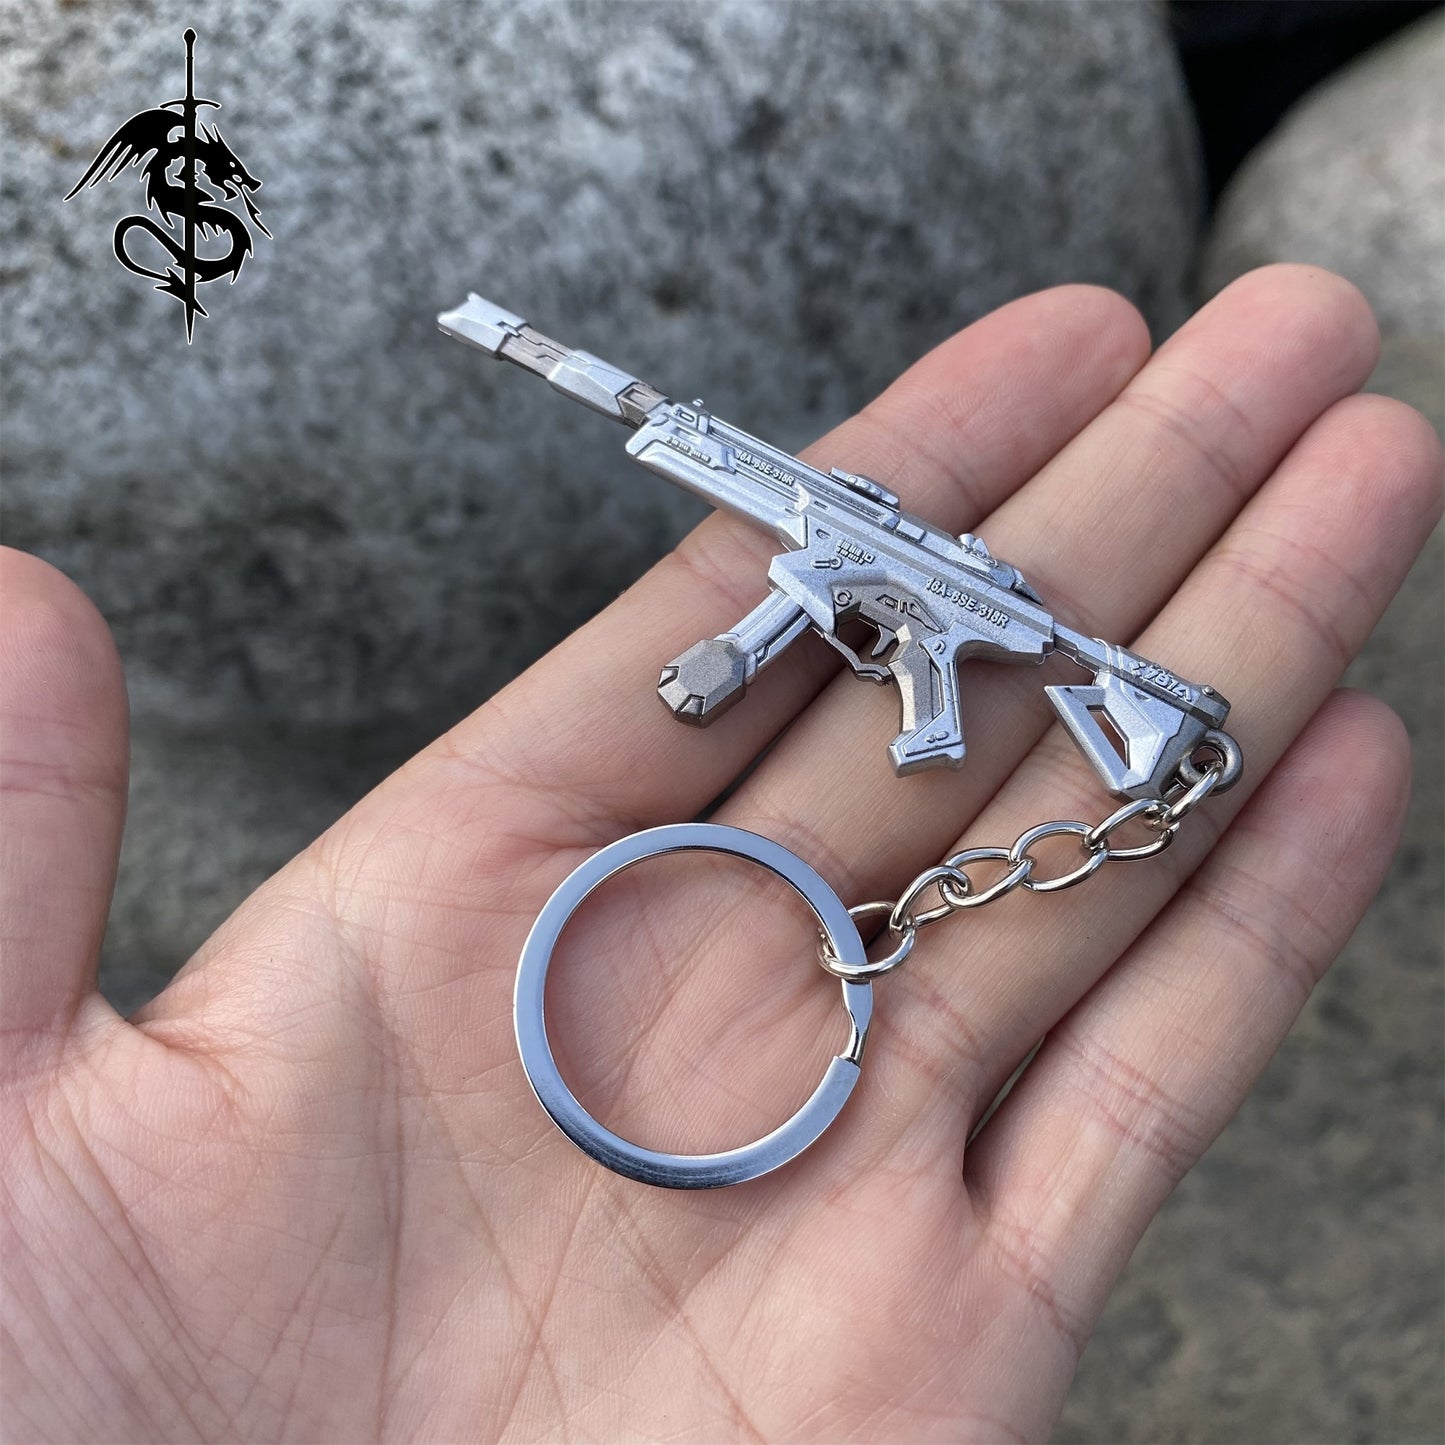 Metal Vandal Mini Keychain Weapon Replica Pendant